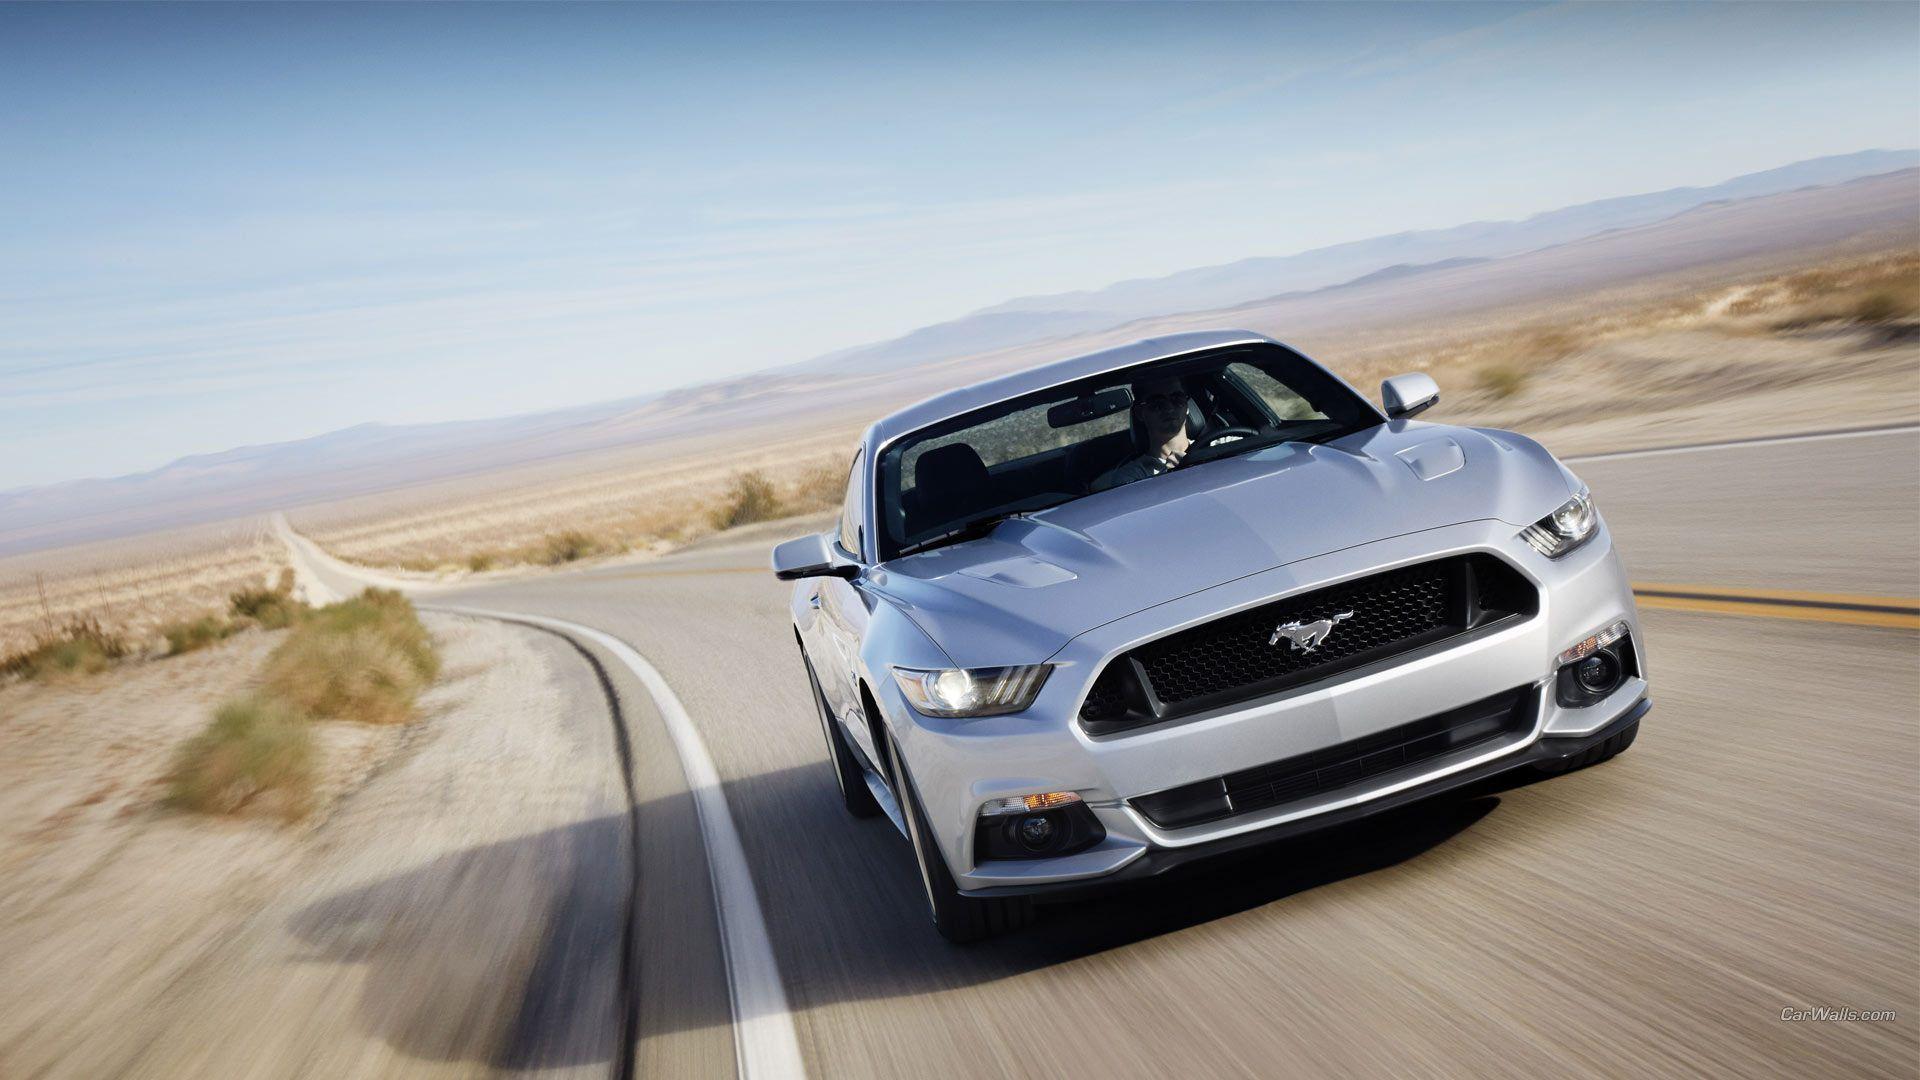 Ford Mustang GT 2015 Car Wallpaper Download For Desktop